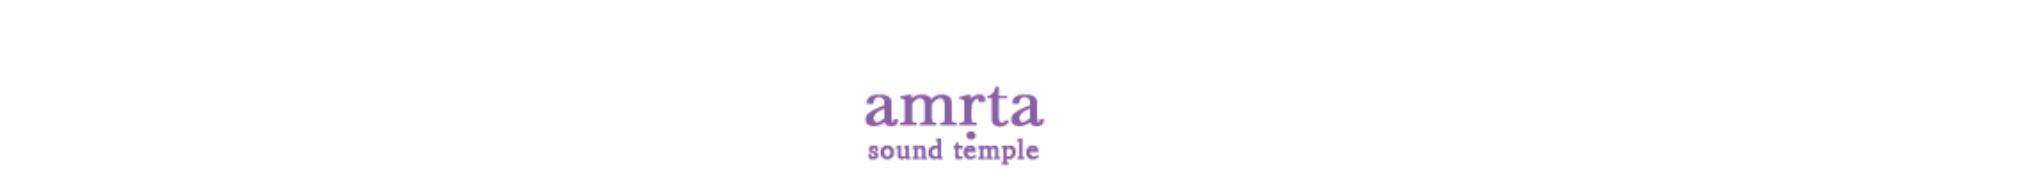 amrita sound temple